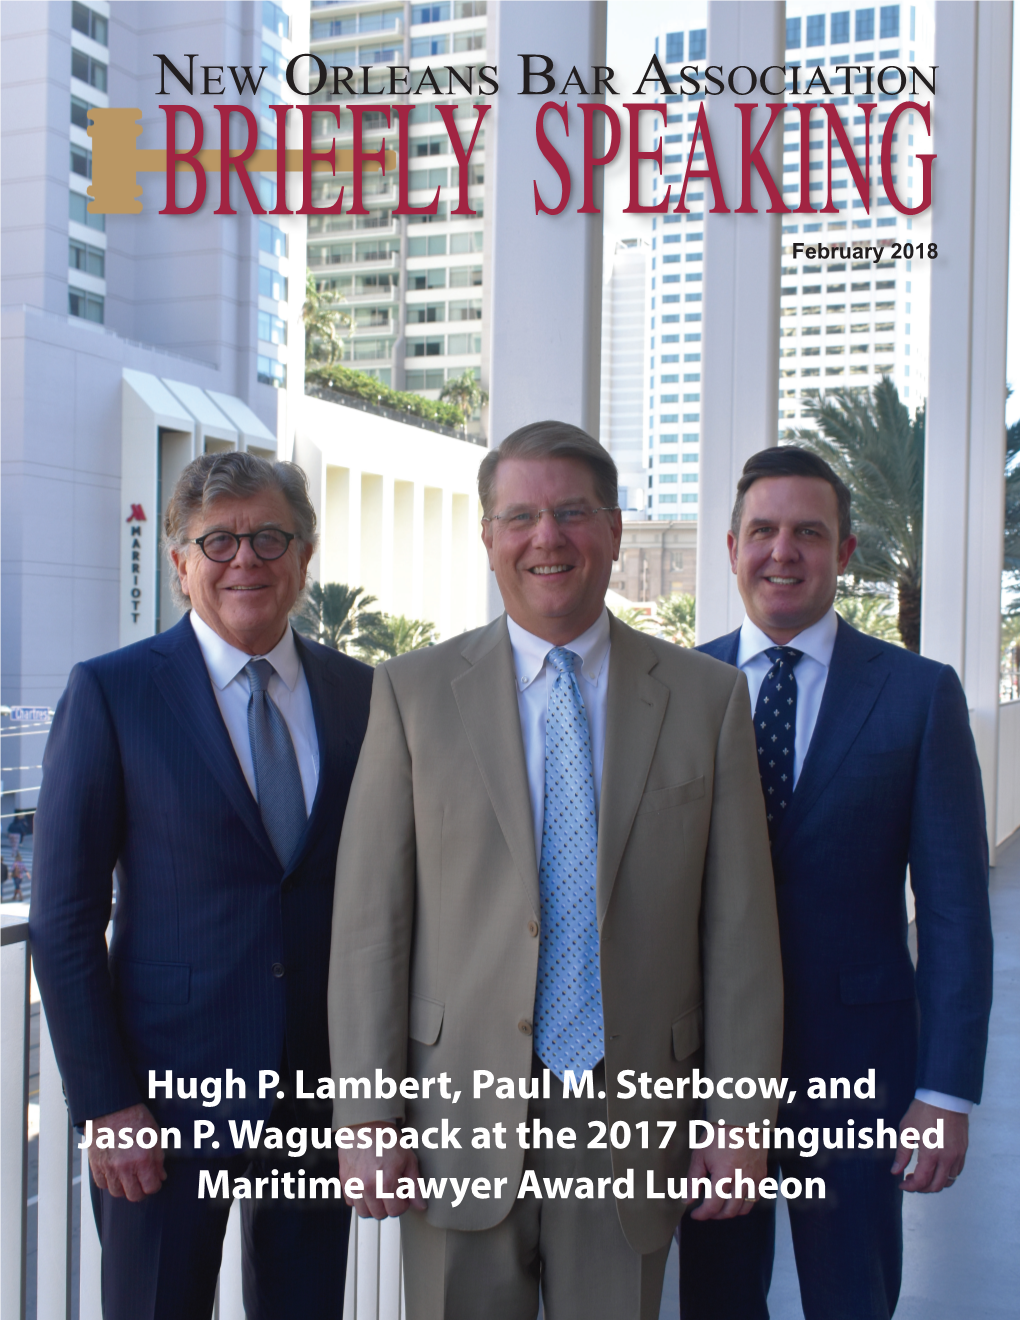 Hugh P. Lambert, Paul M. Sterbcow, and Jason P. Waguespack at The